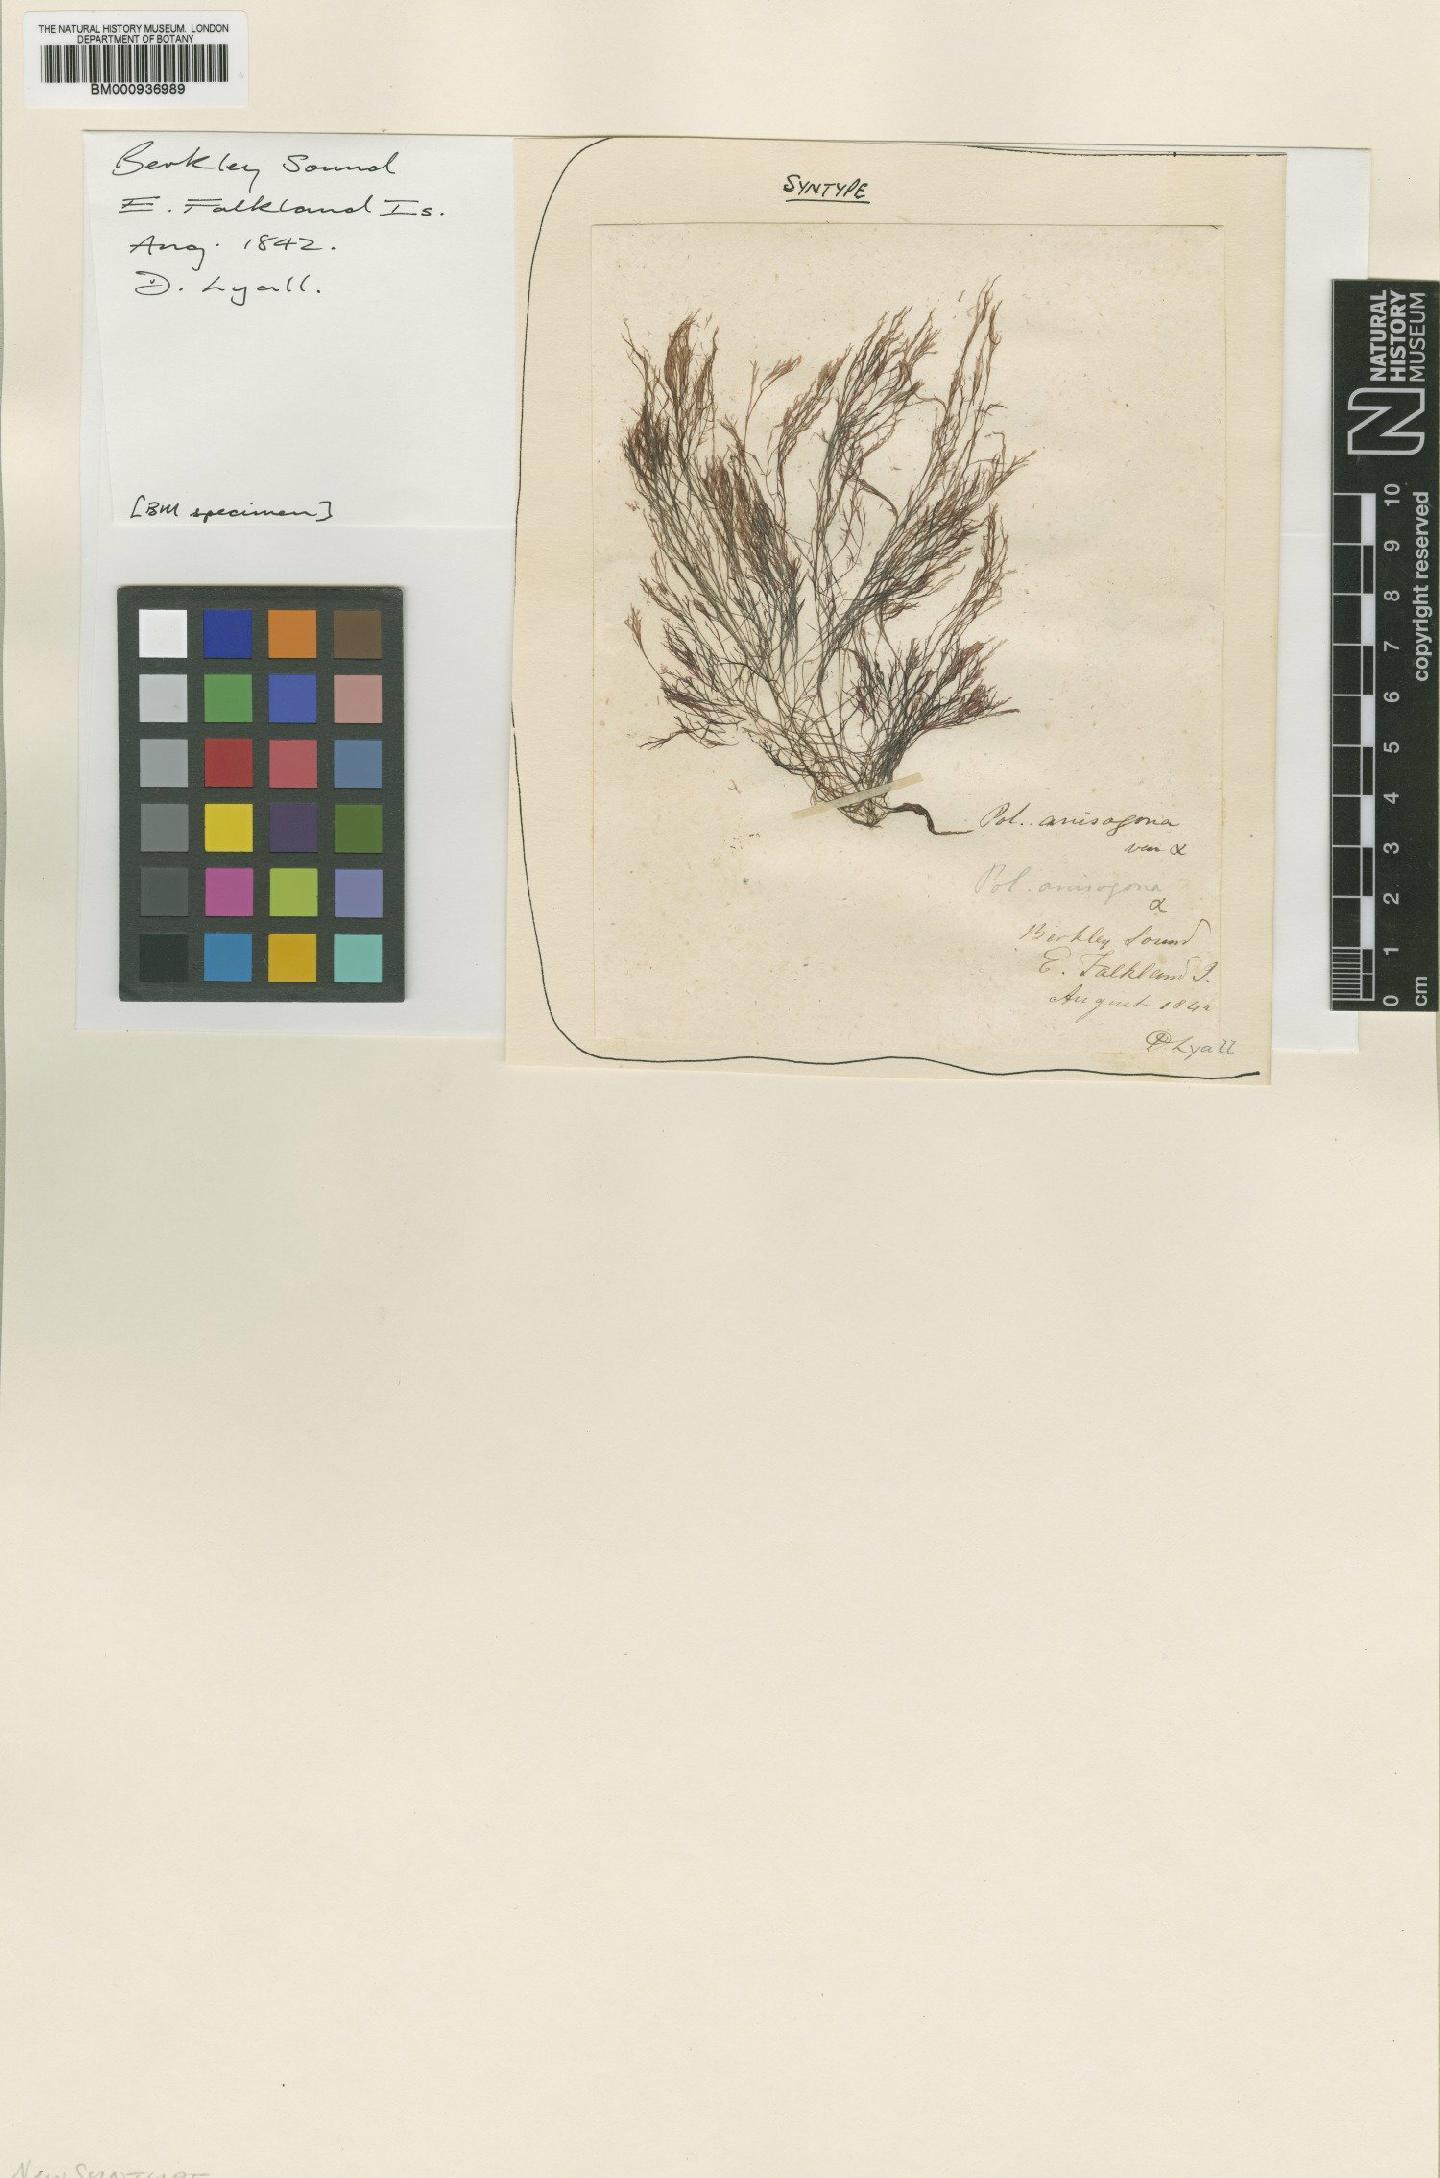 To NHMUK collection (Polysiphonia anisogona Hook.f. & Harv.; Syntype; NHMUK:ecatalogue:465246)